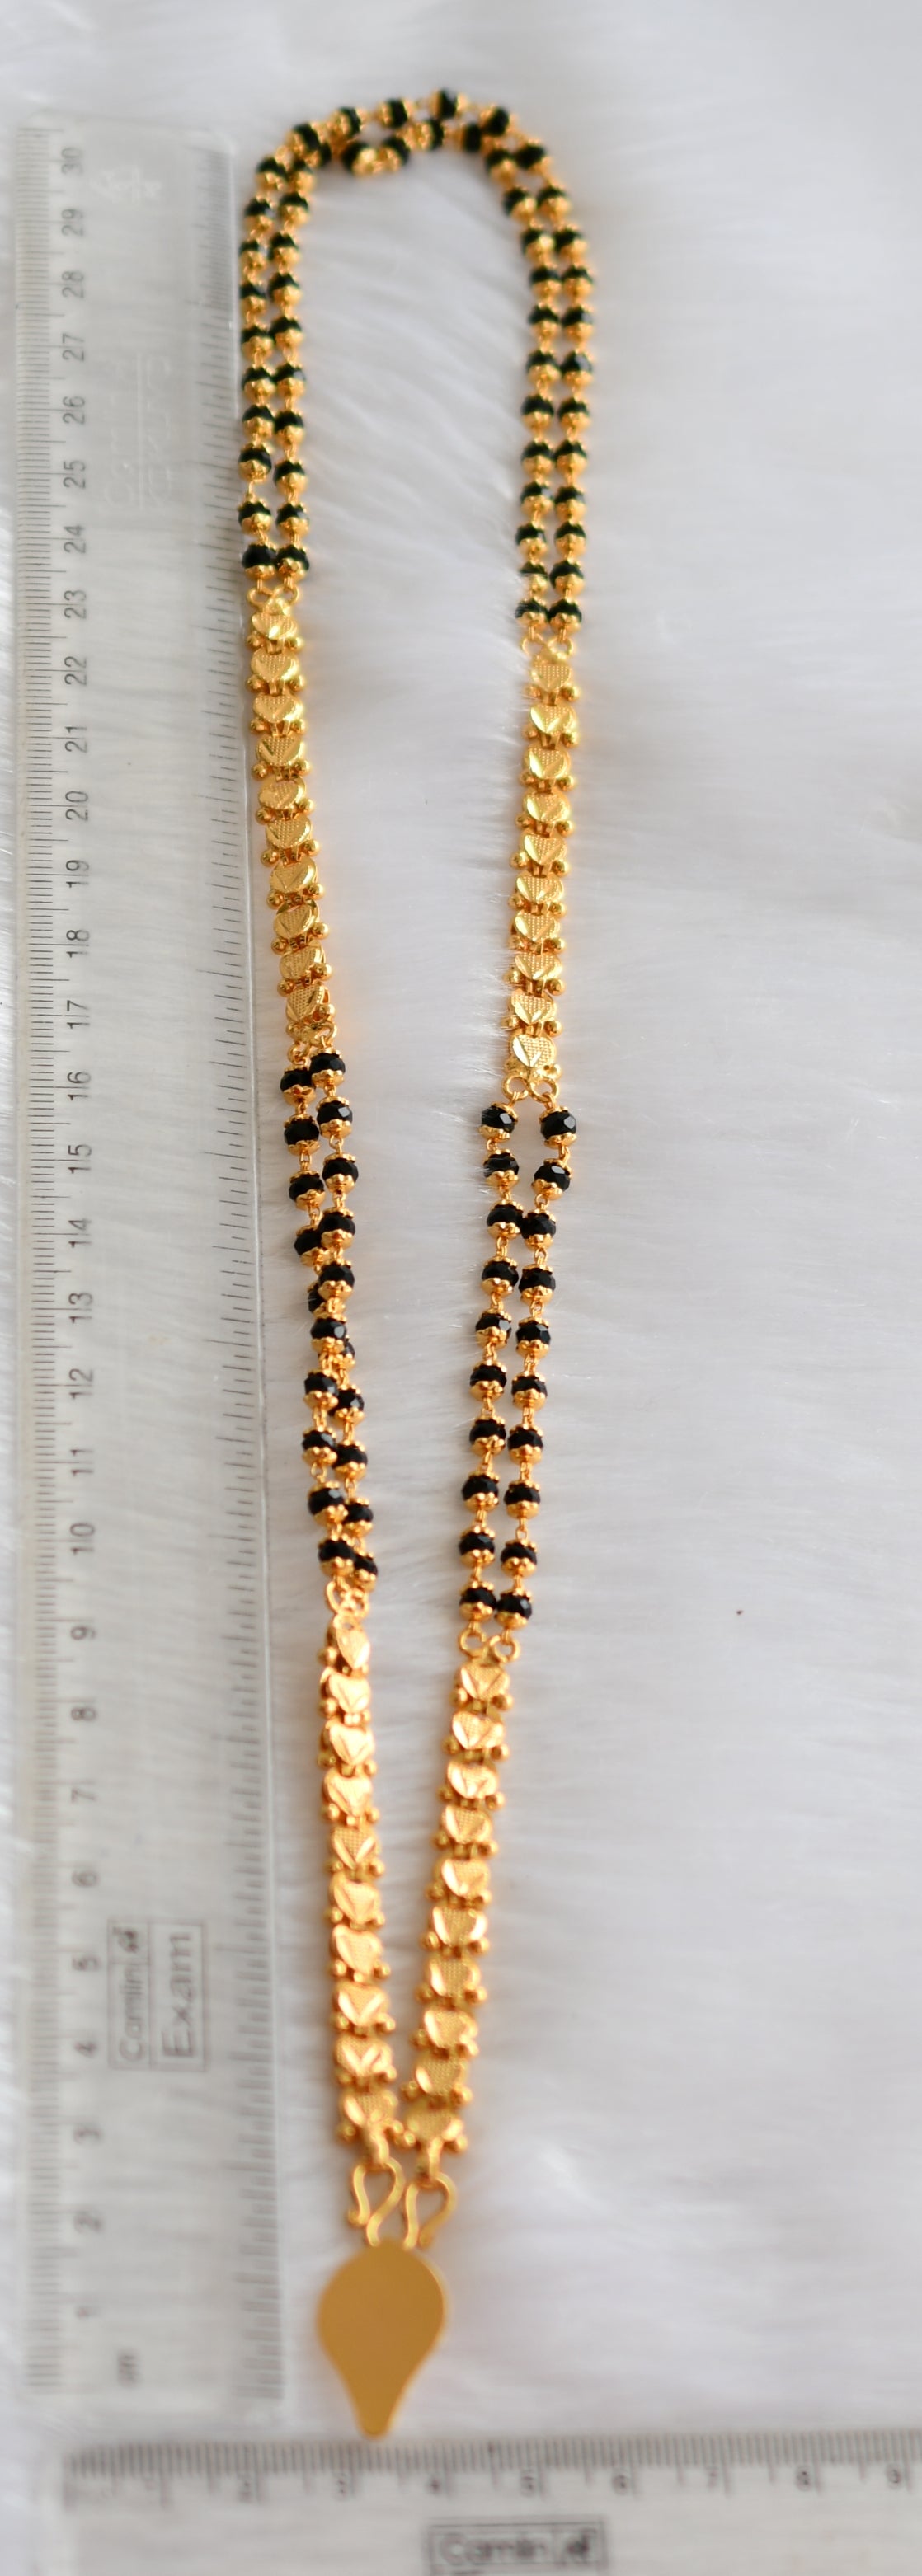 Gold tone elakka thali pendant with karimani mala dj-38593